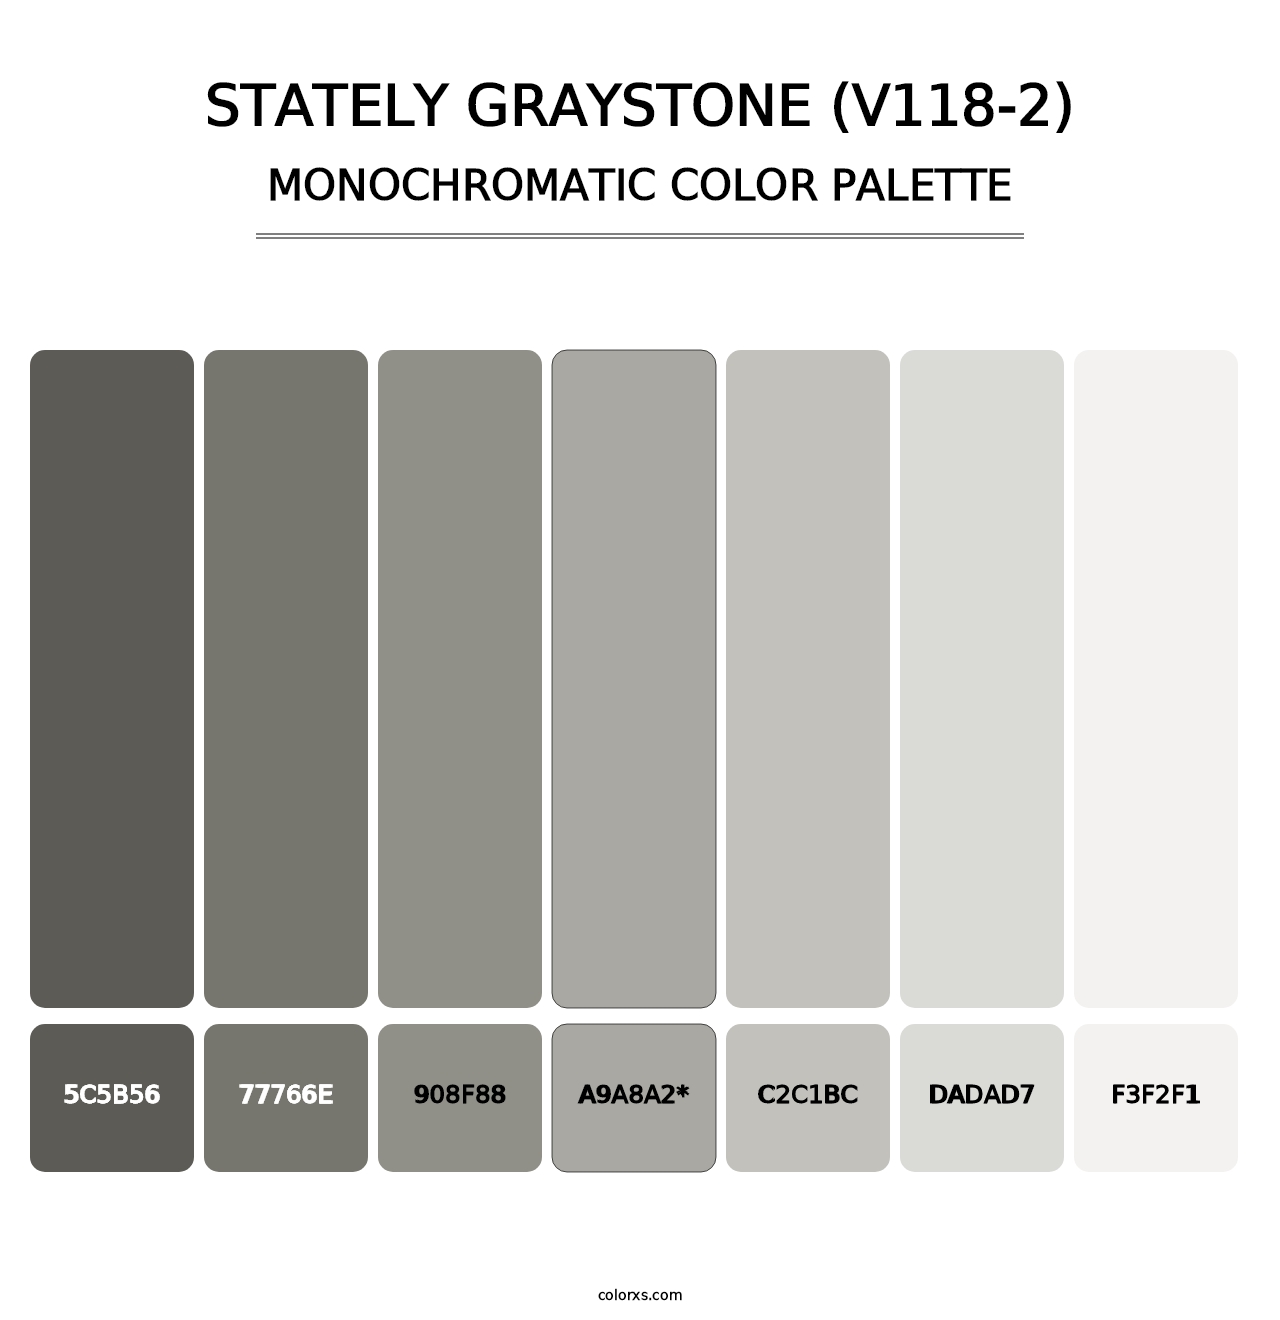 Stately Graystone (V118-2) - Monochromatic Color Palette